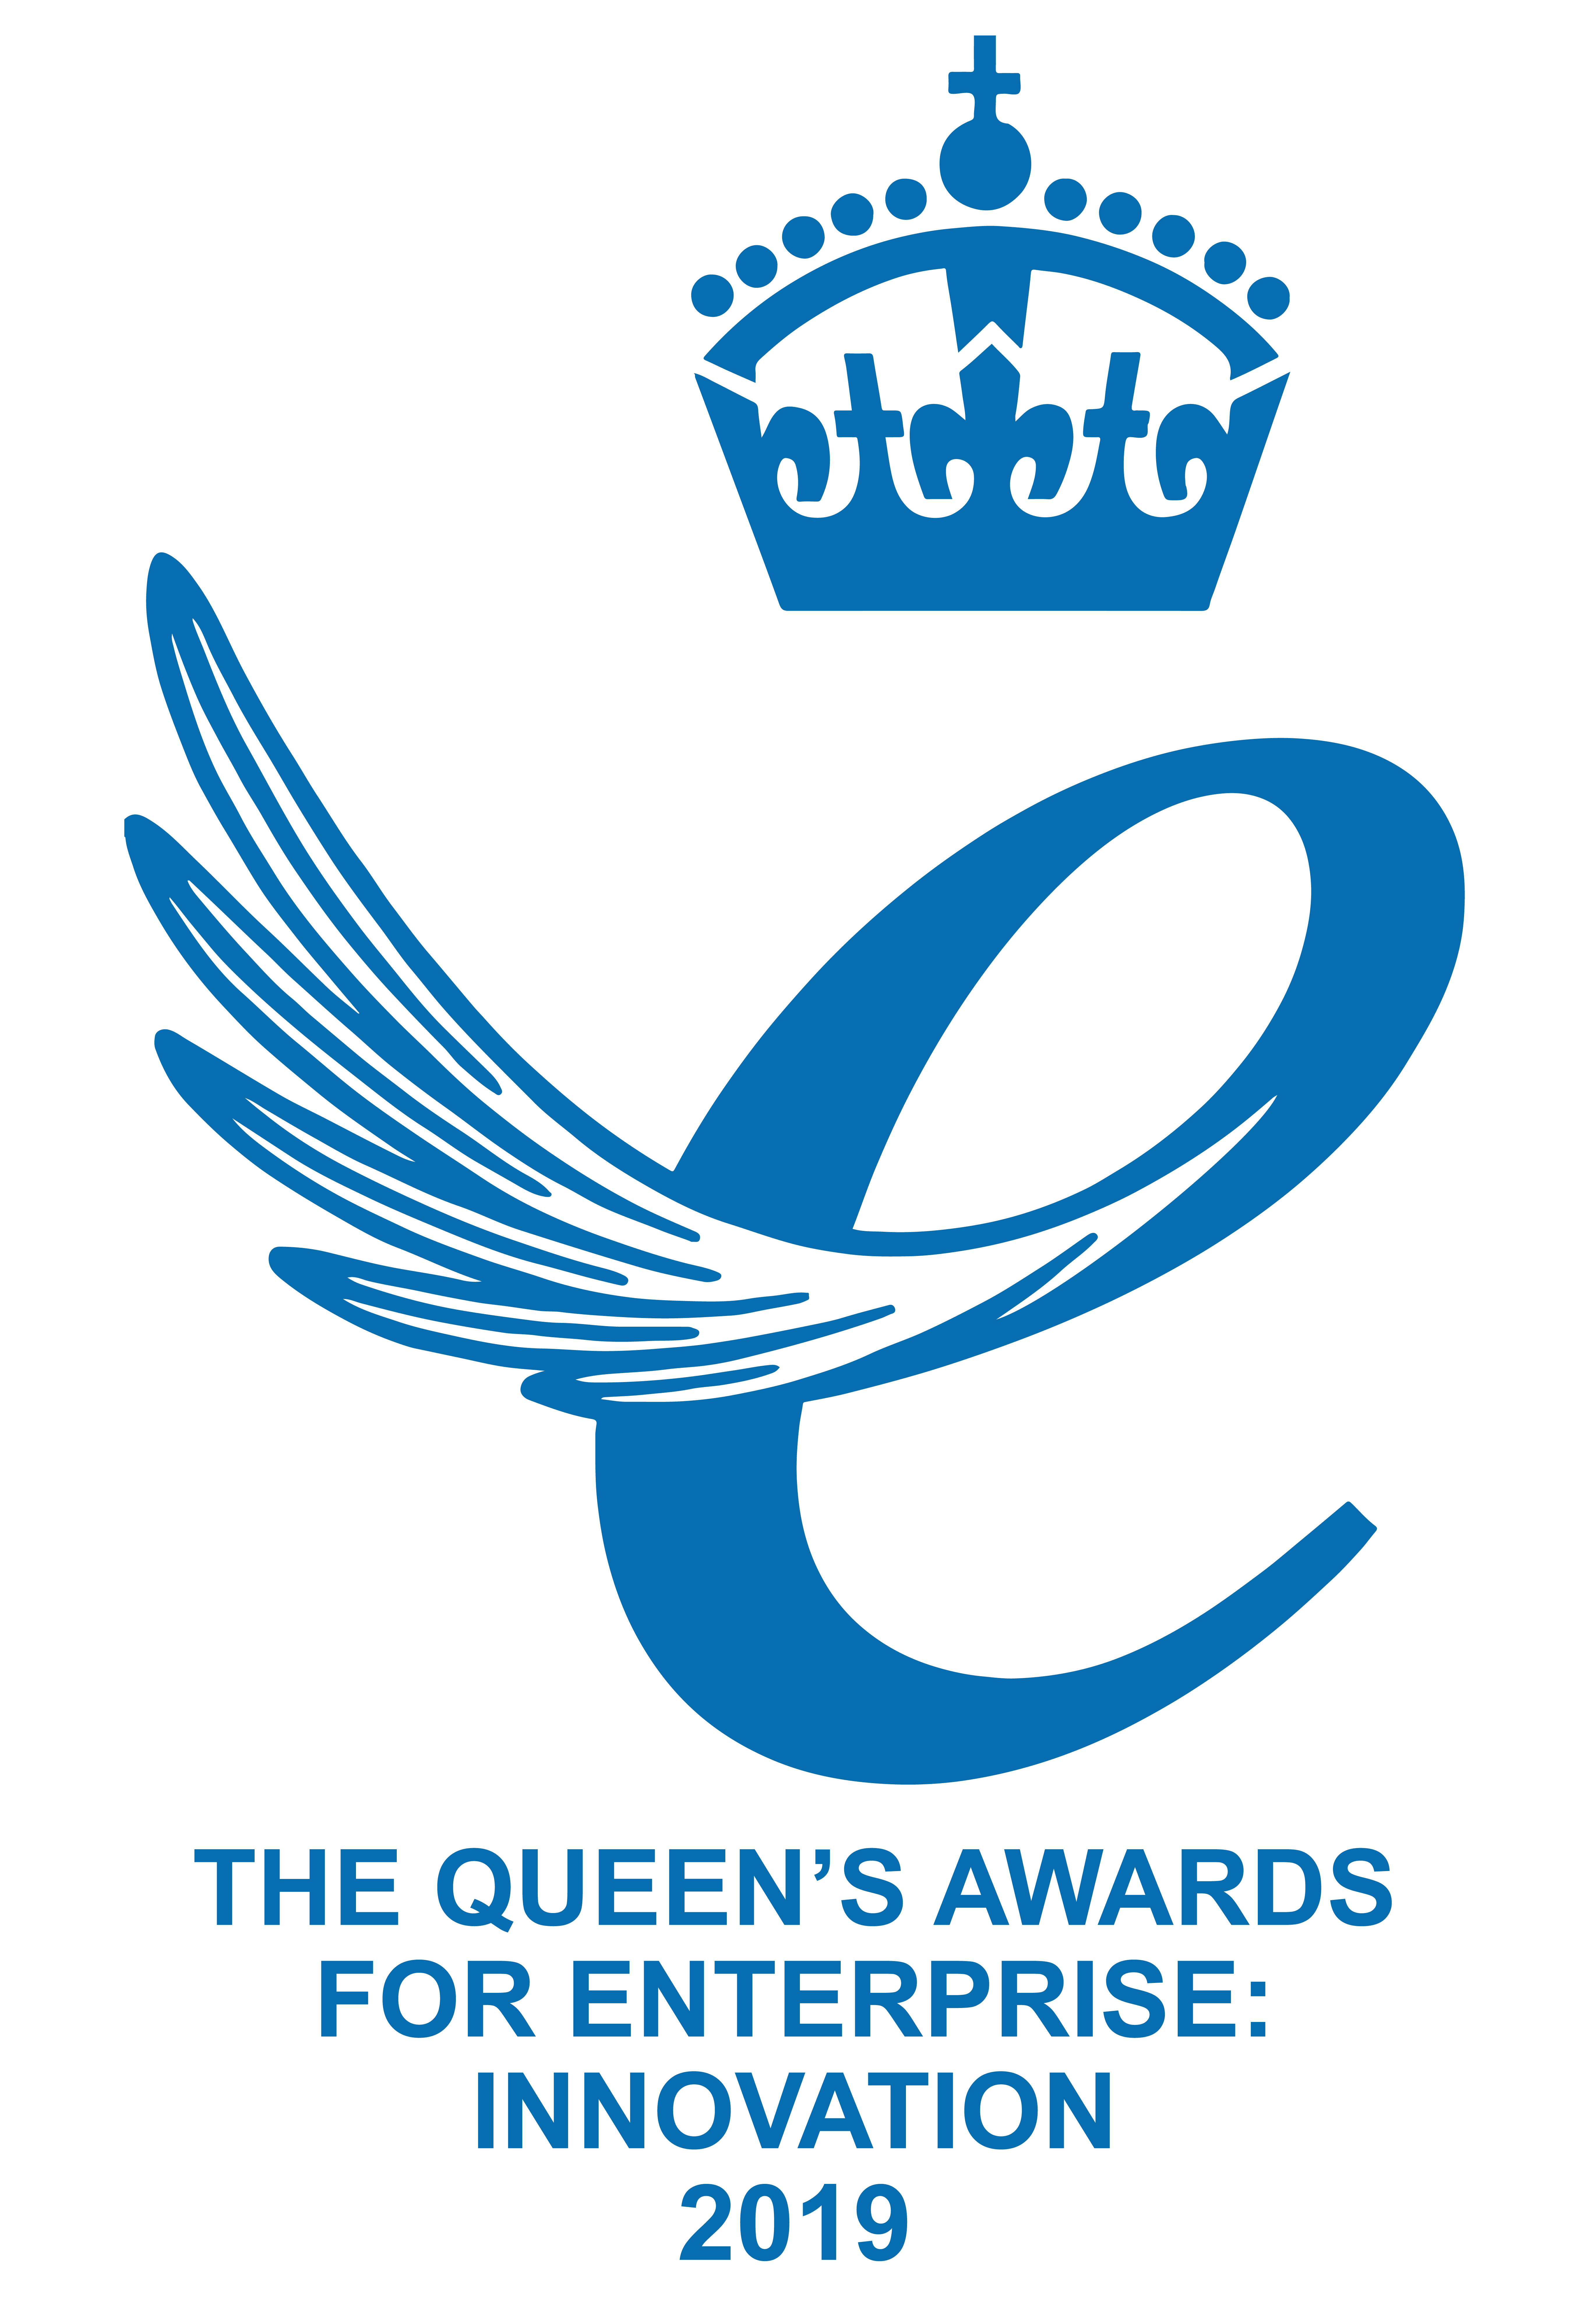 Queen’s Award for Enterprise, Innovation 2019